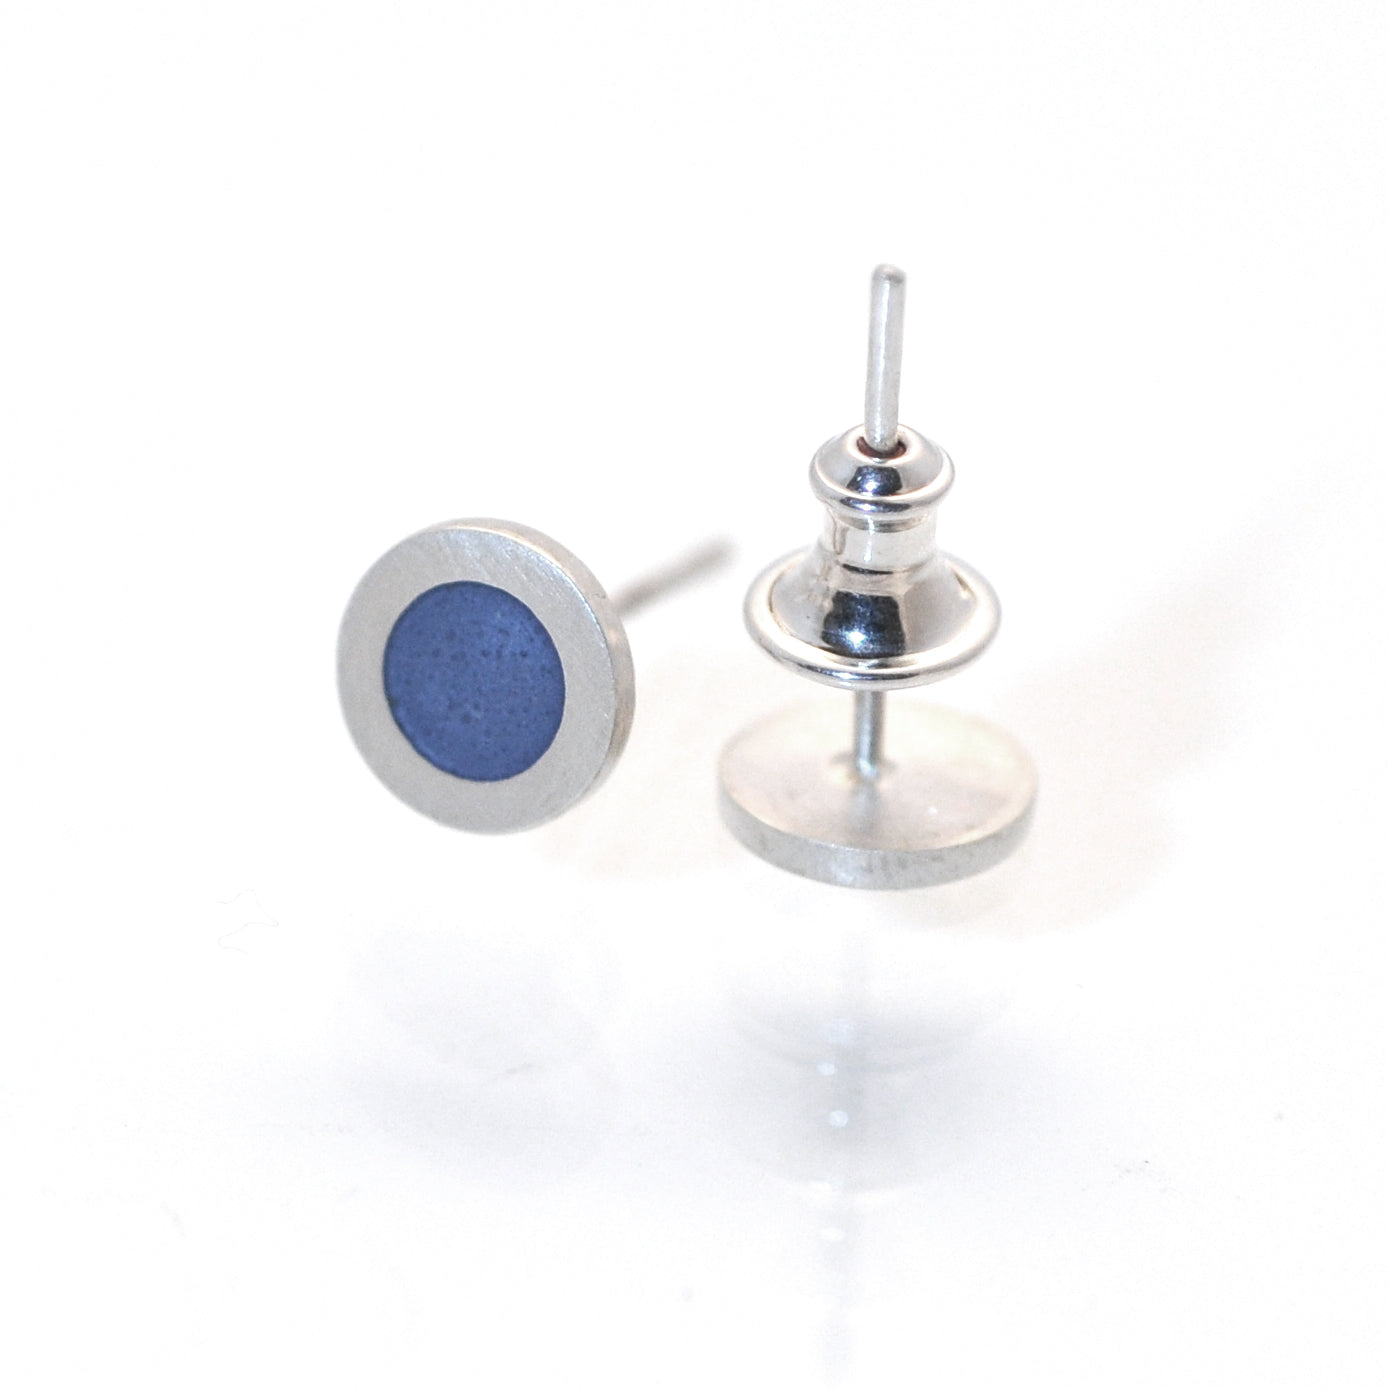 Small round silver flat ear studs, grey blue